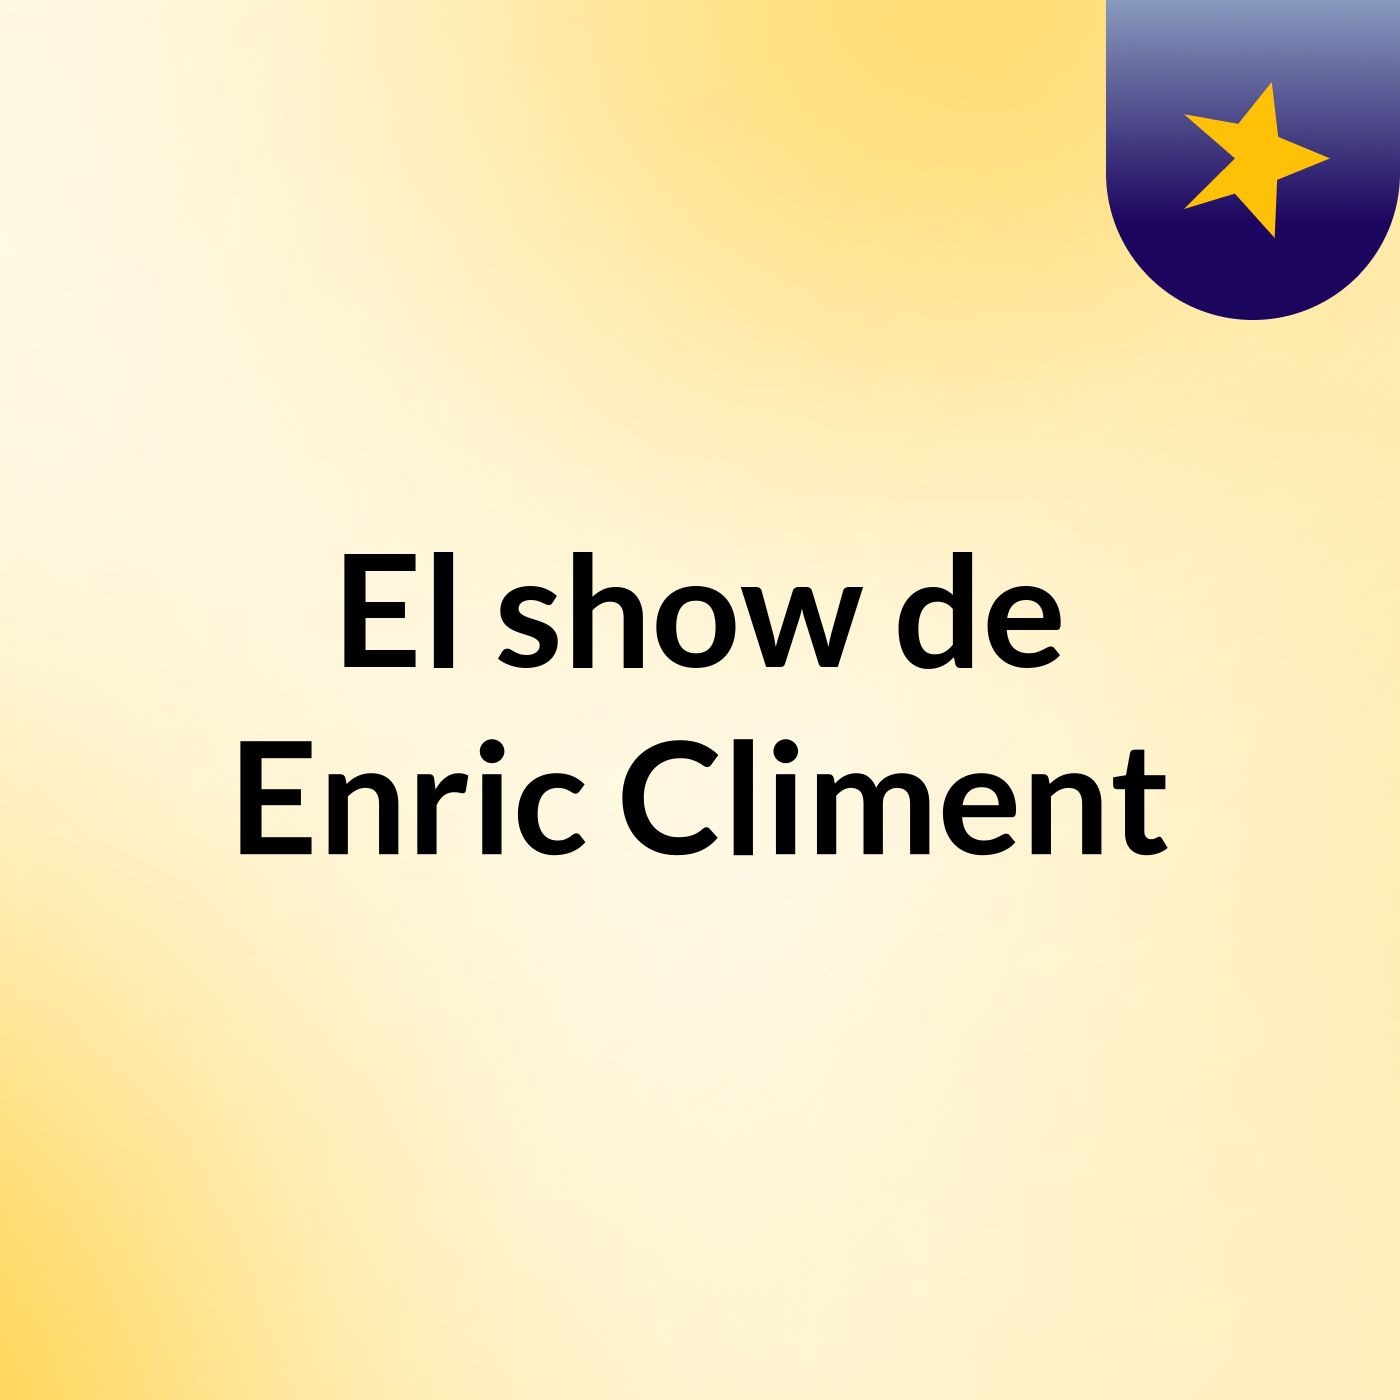 Episodio 4 - El show de Enric Climent